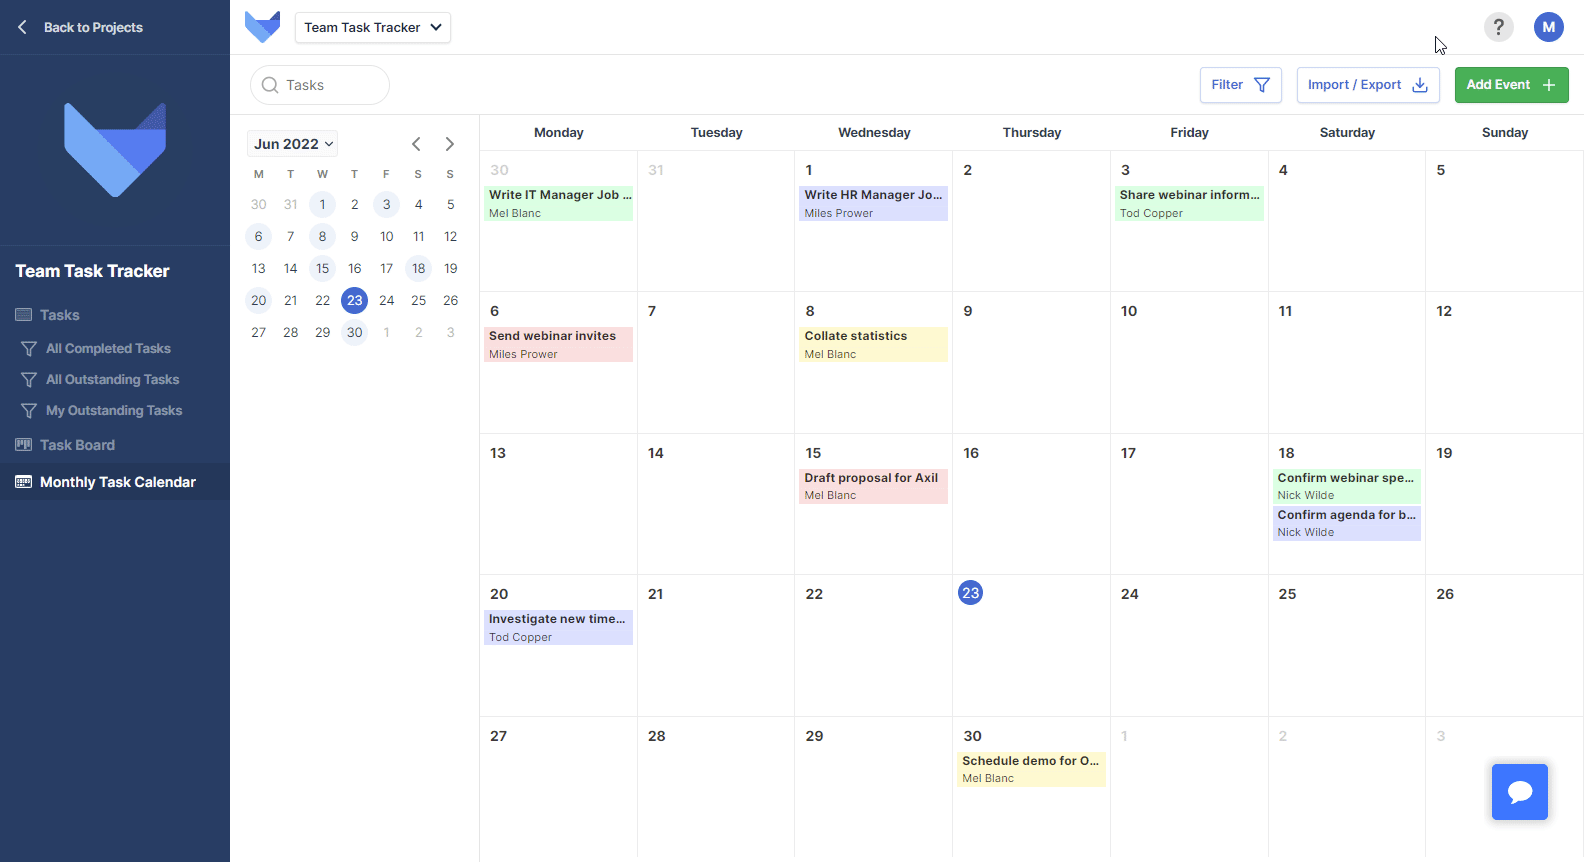 Creating a new calendar event